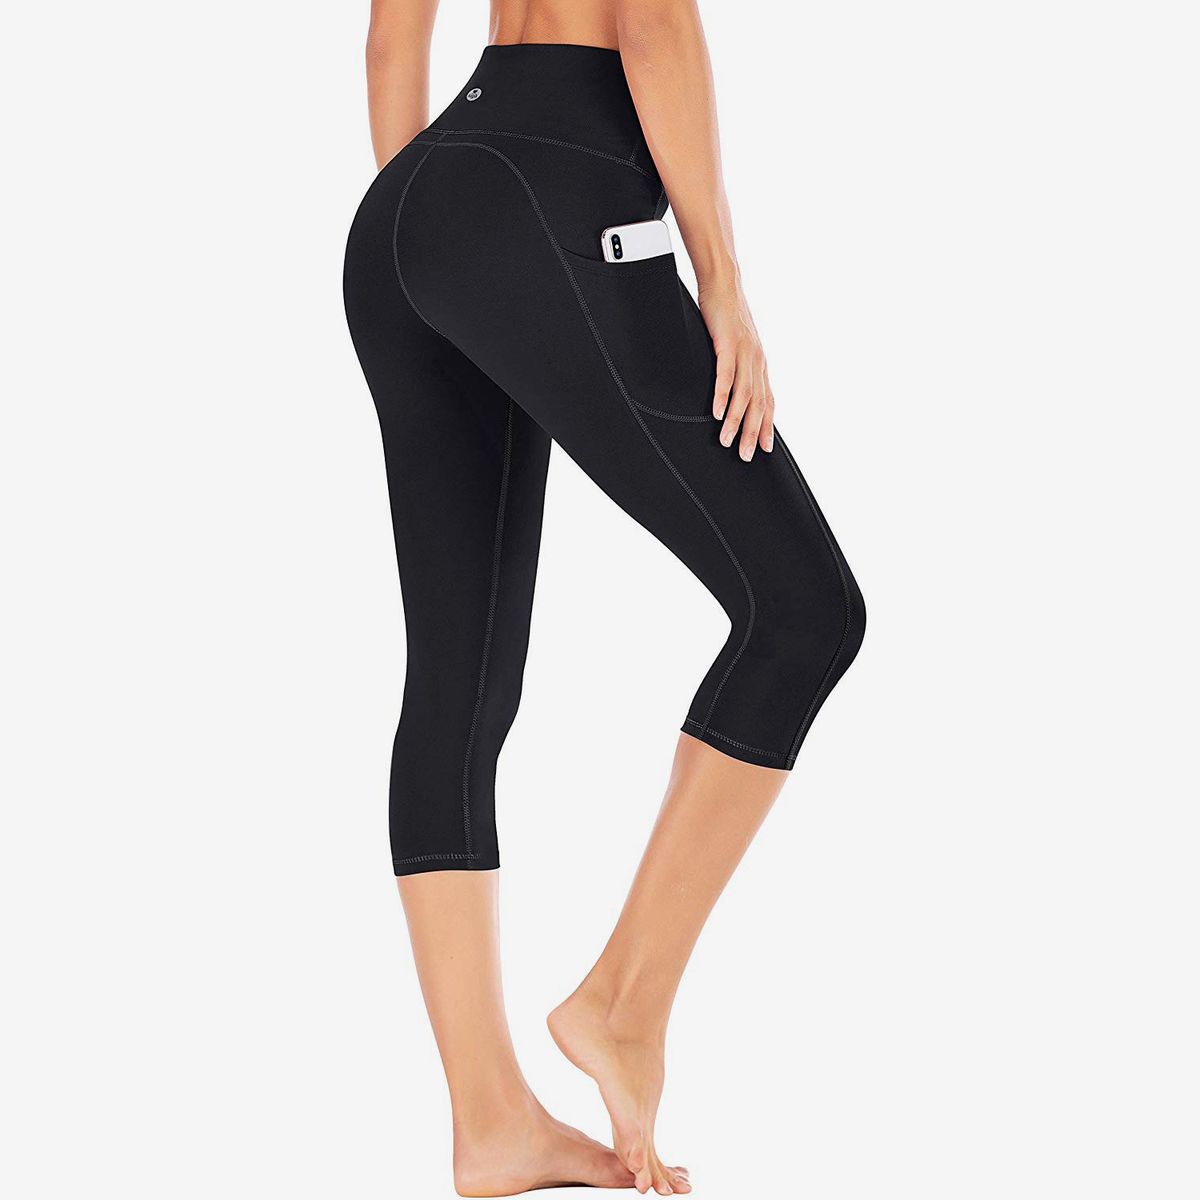 Kyopp High Waist Yoga Pants Tummy Control Workout Running Stretch Yoga Leggings Women Capris Pants 